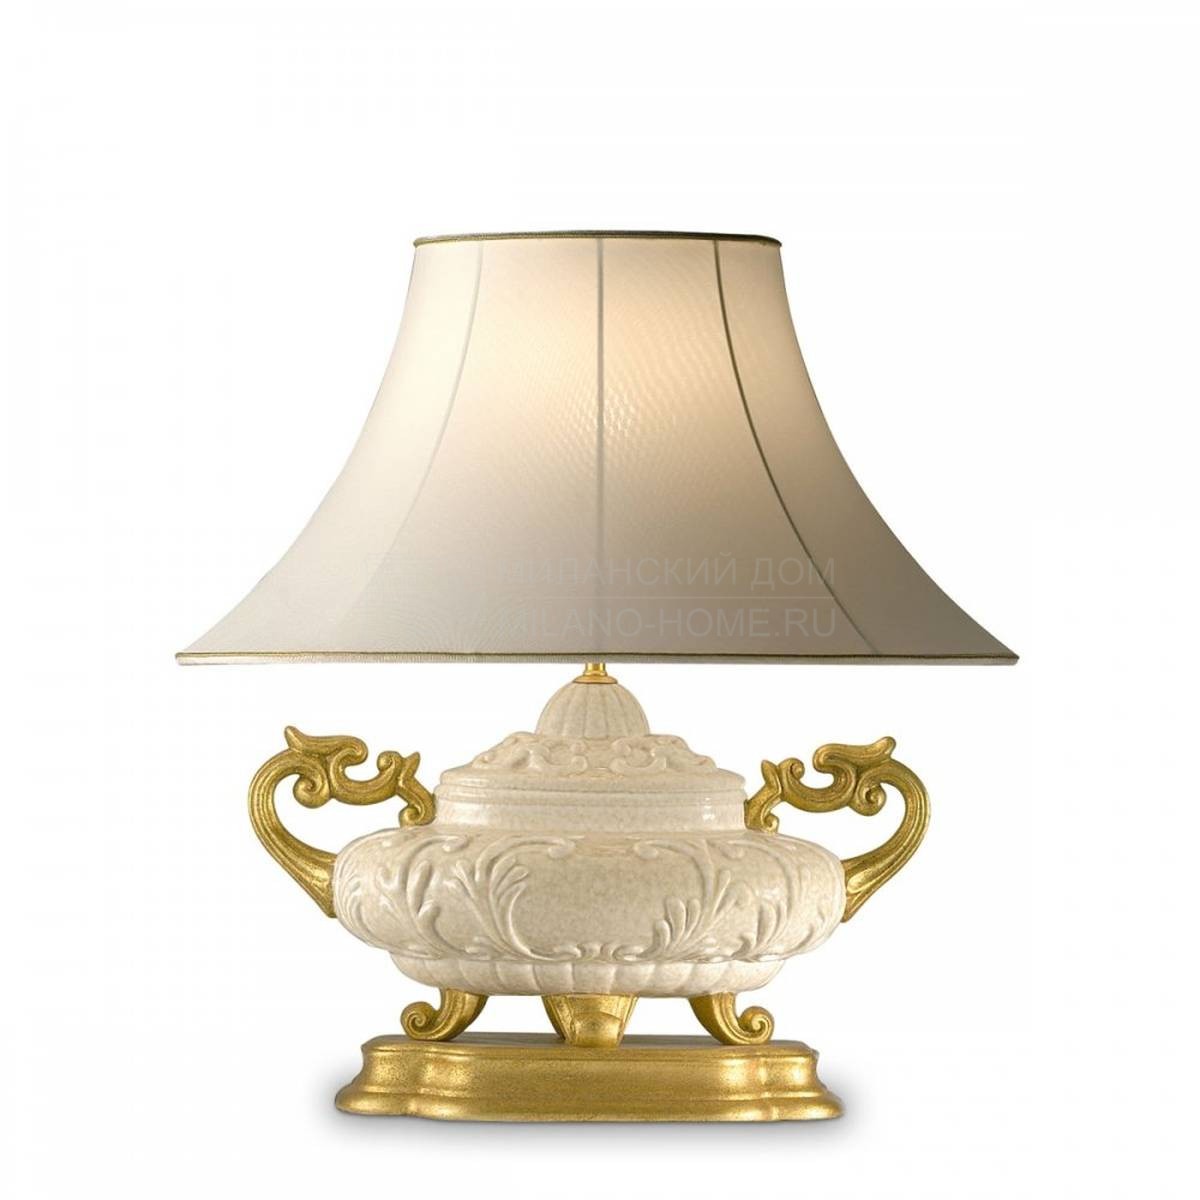 Настольная лампа Giulia table lamp из Италии фабрики MARIONI